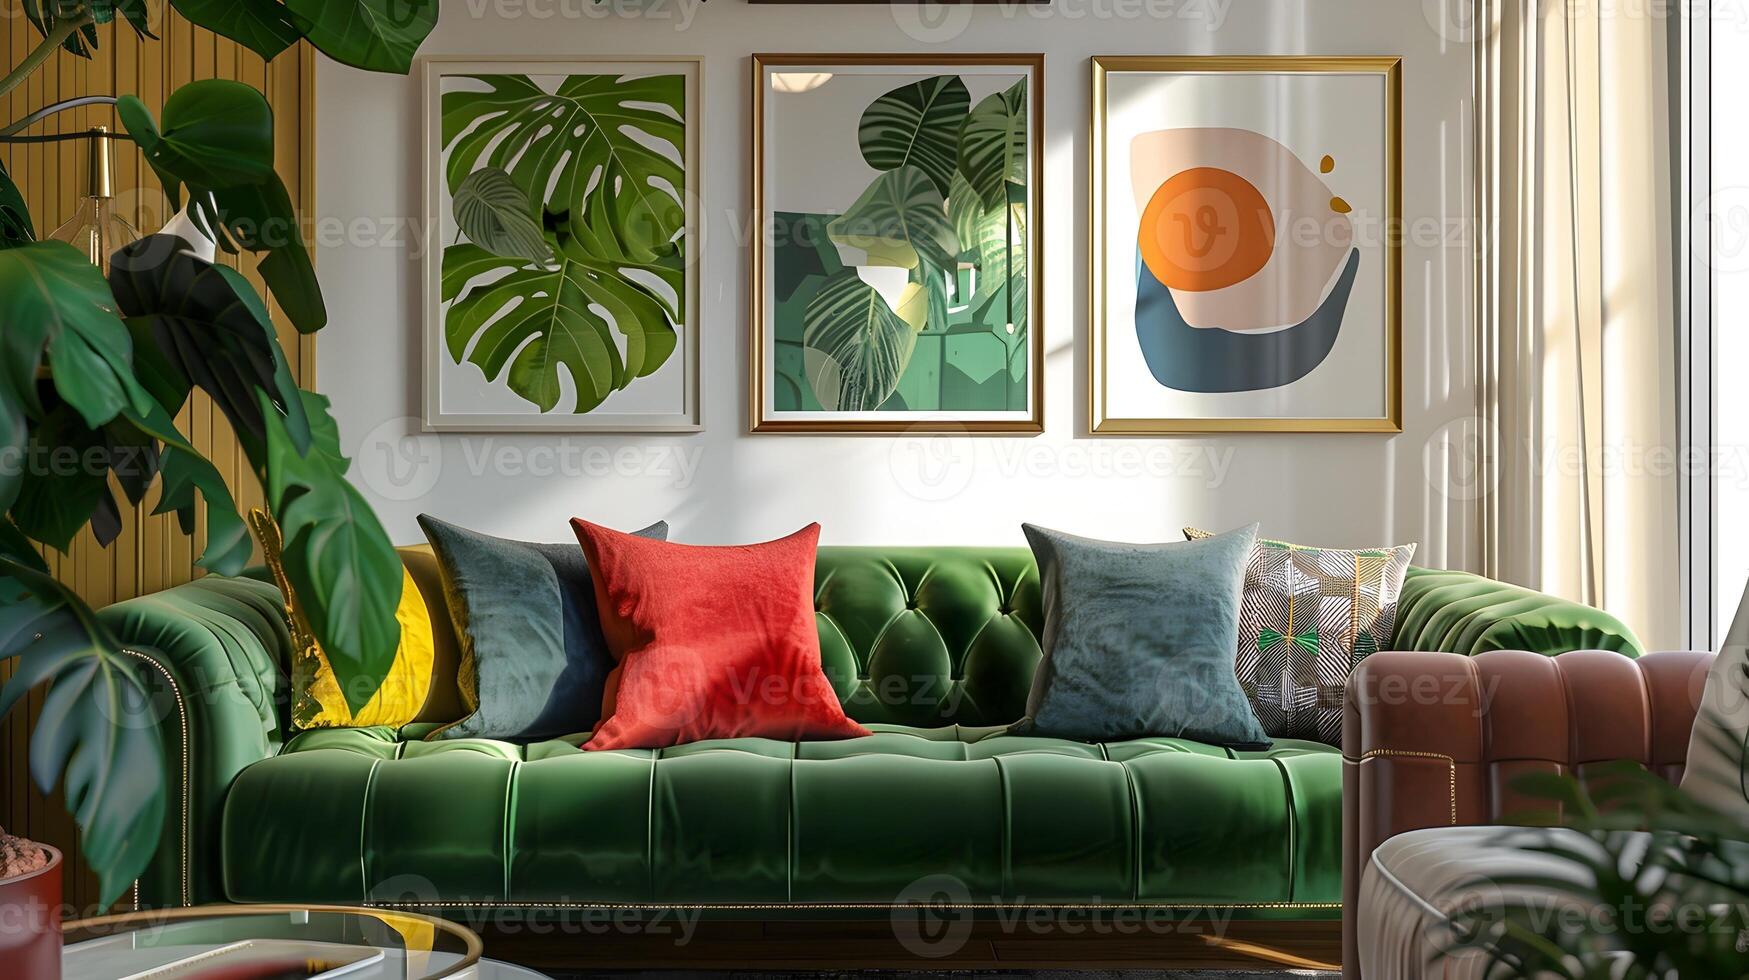 vivo habitación con vibrante pared Arte y verde terciopelo sofá evocando moderno hogar decoración y calma foto